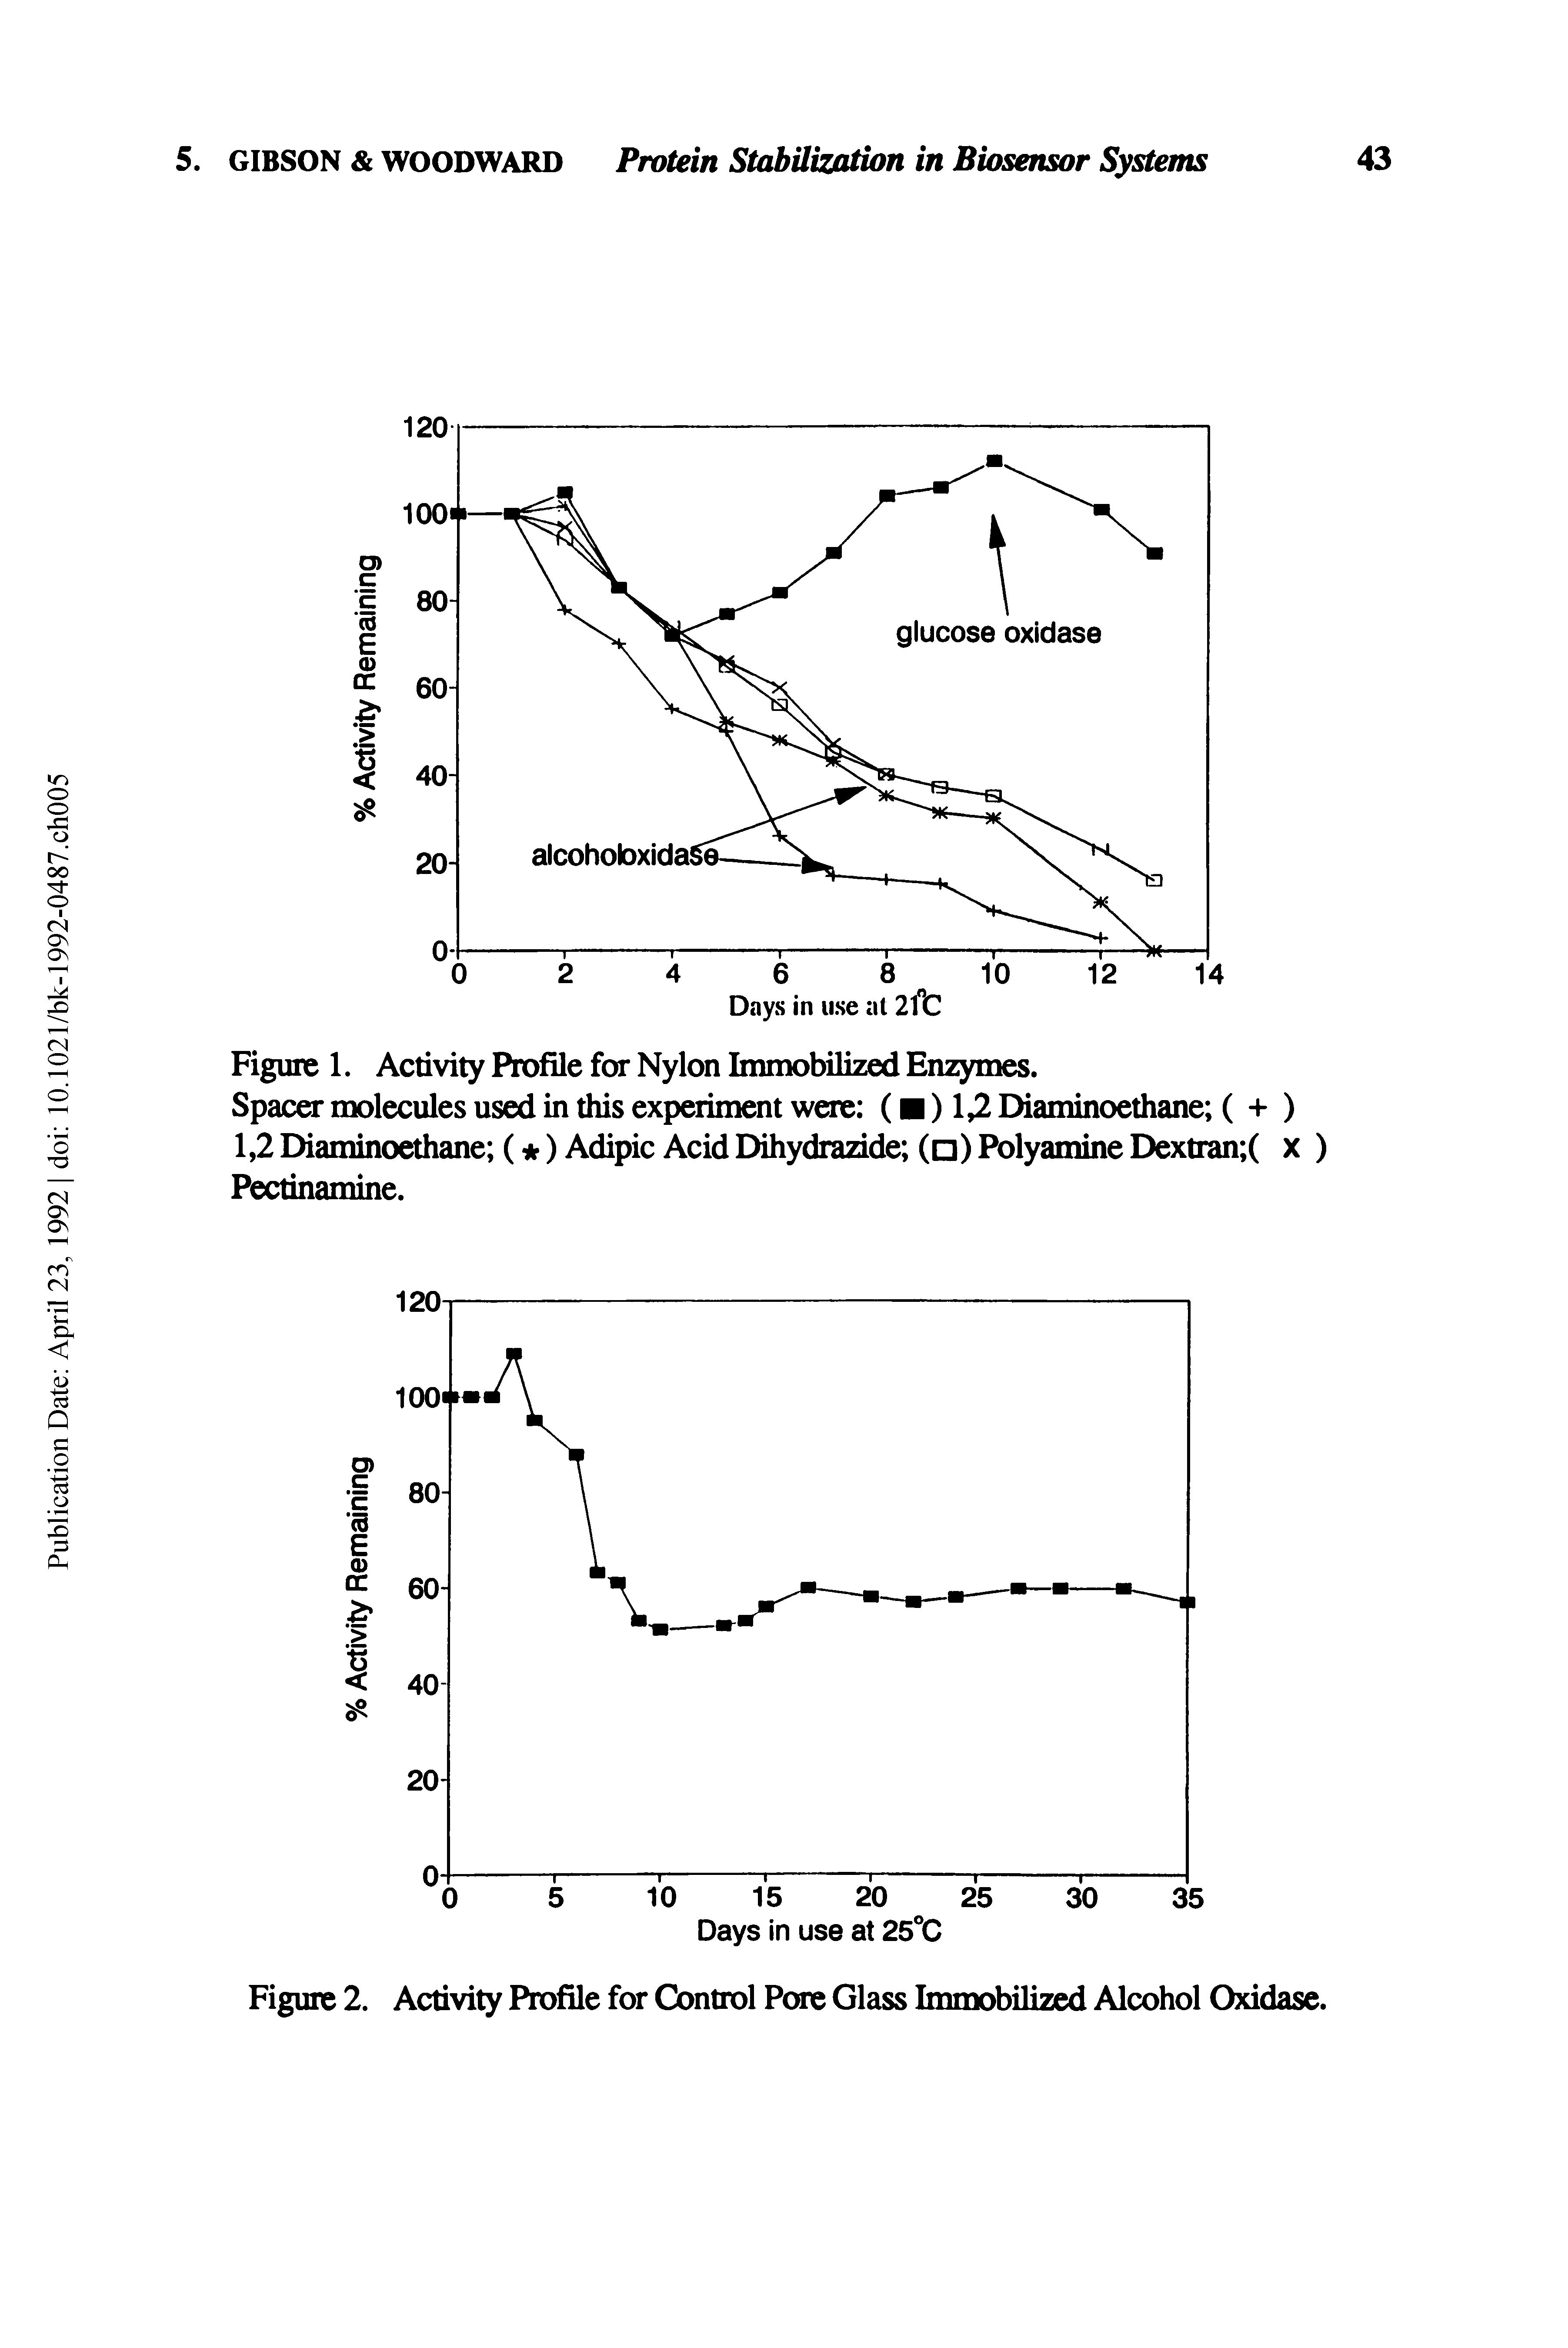 Figure 2. Activity Profile for Control Pore Glass Immobilized Alcohol Oxidase.